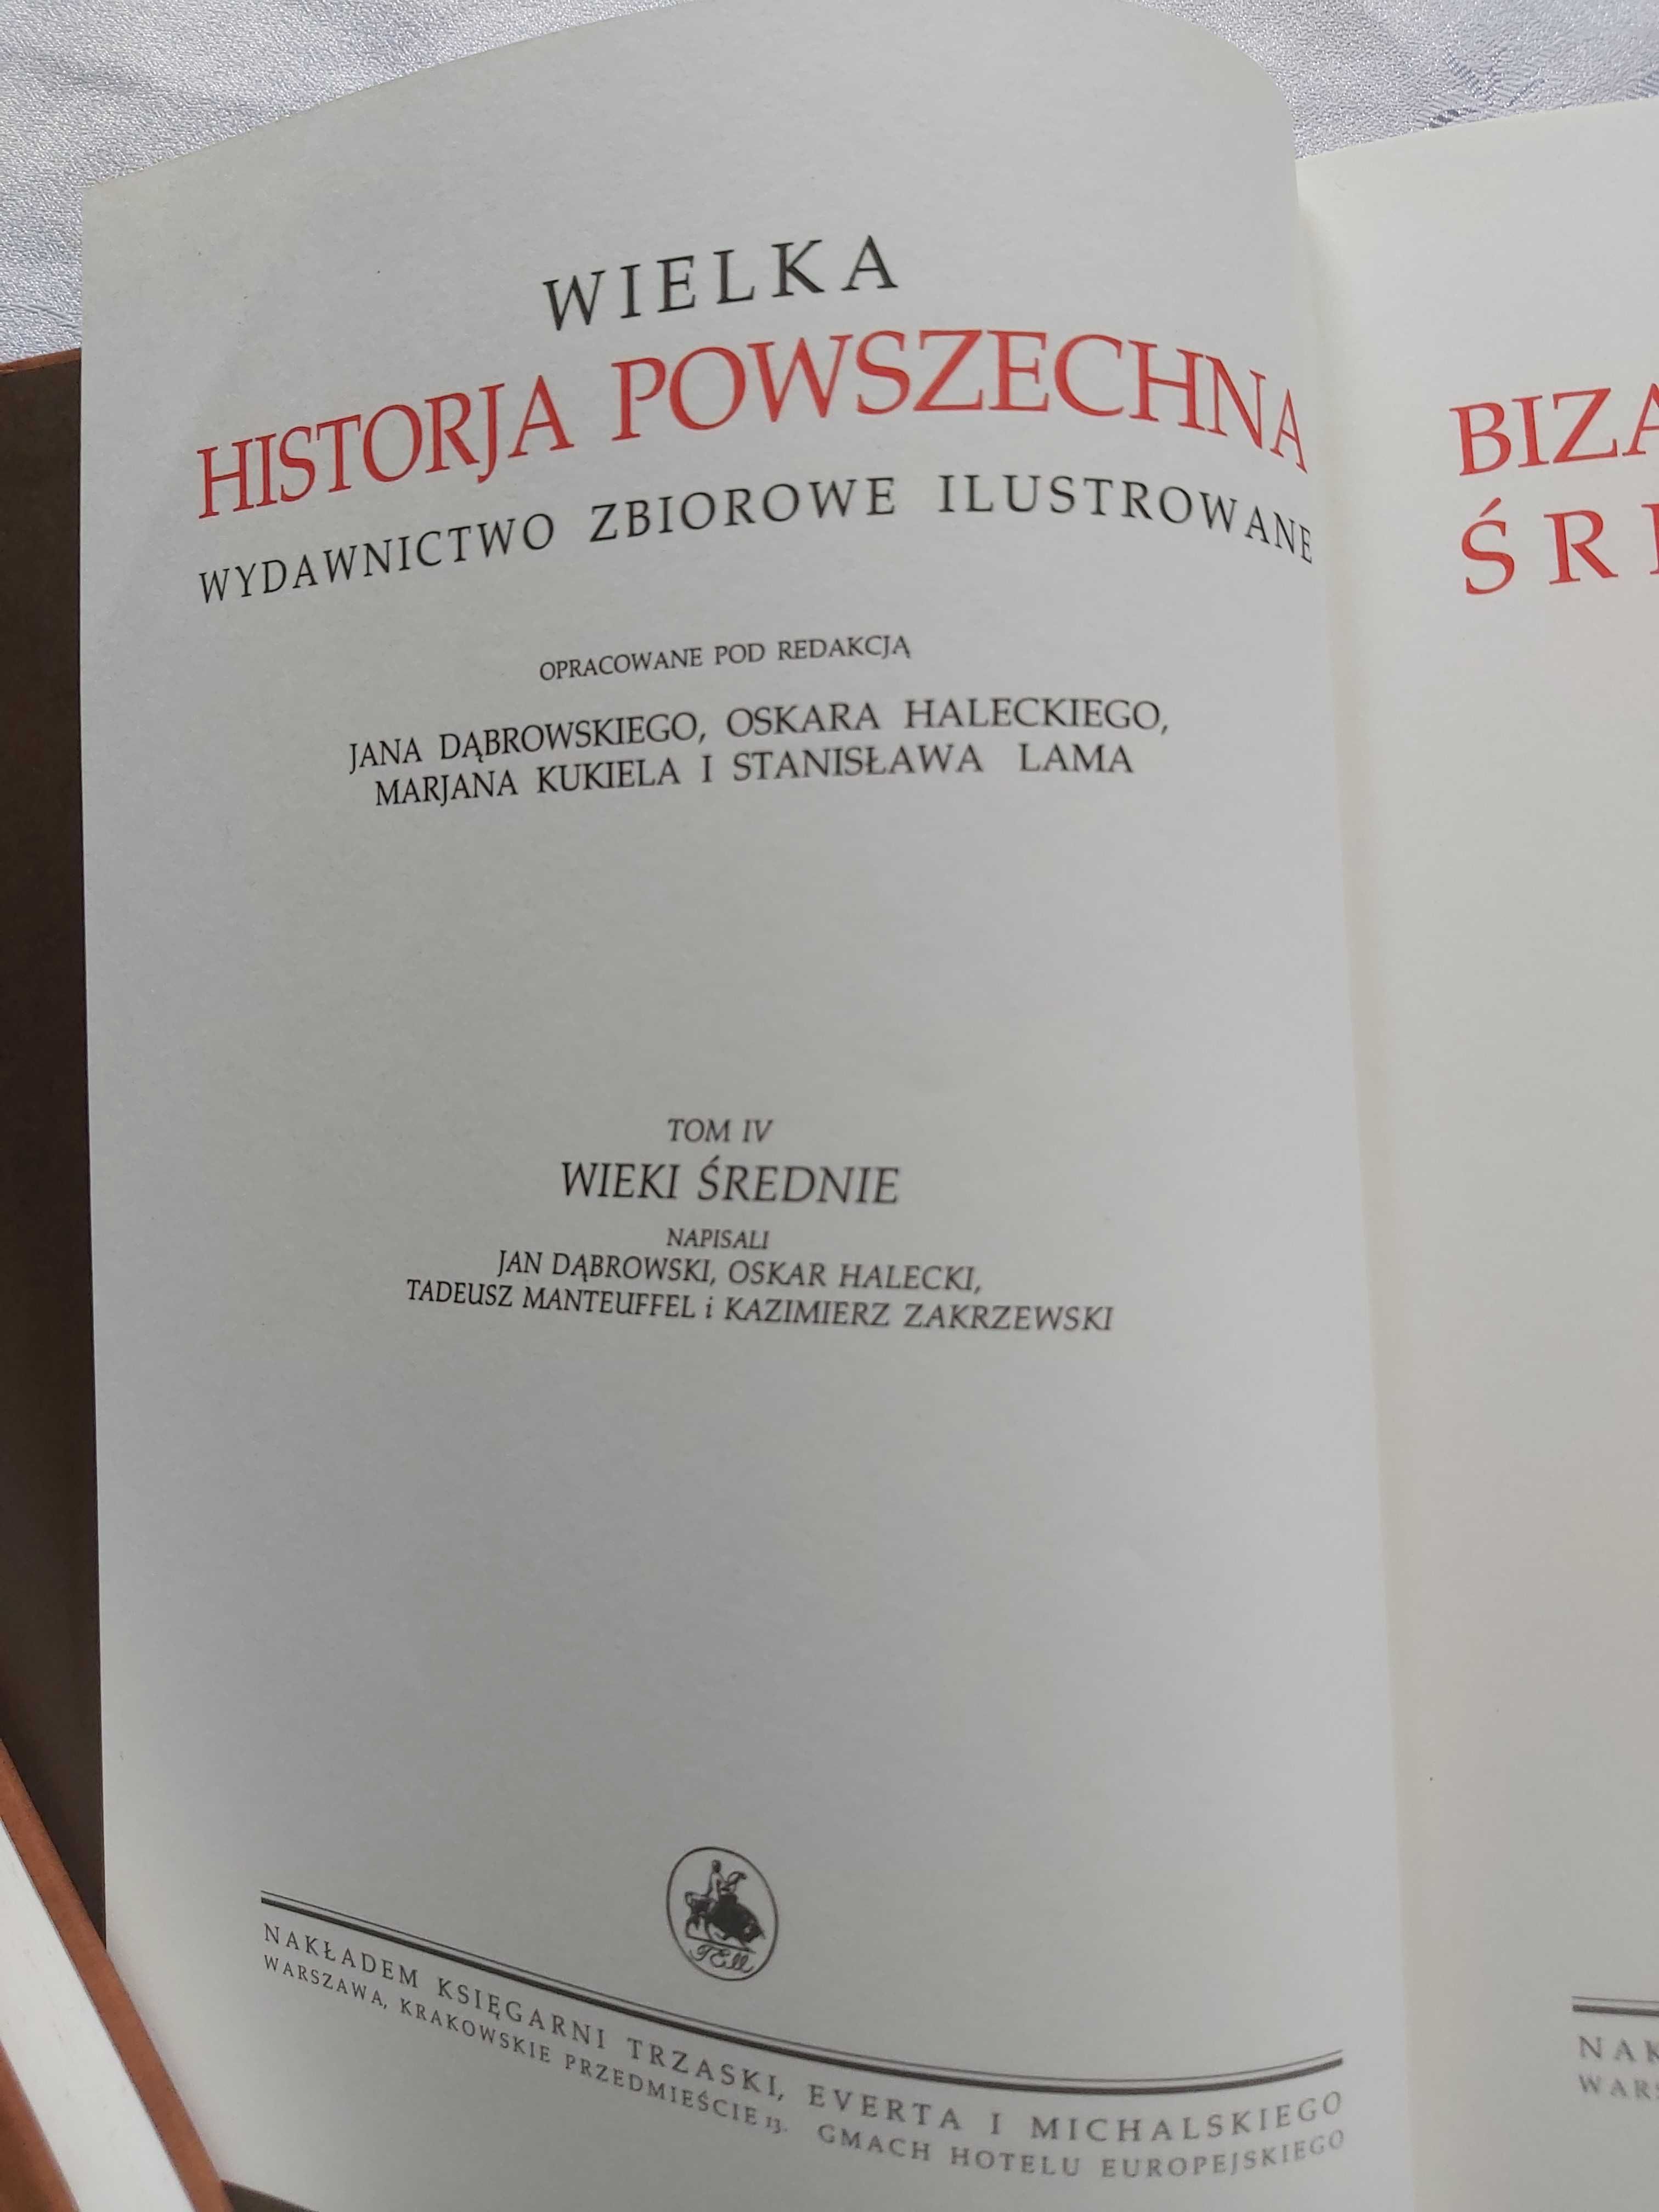 Wielka Historja Powszechna - Trzaska, Evert, Michalski